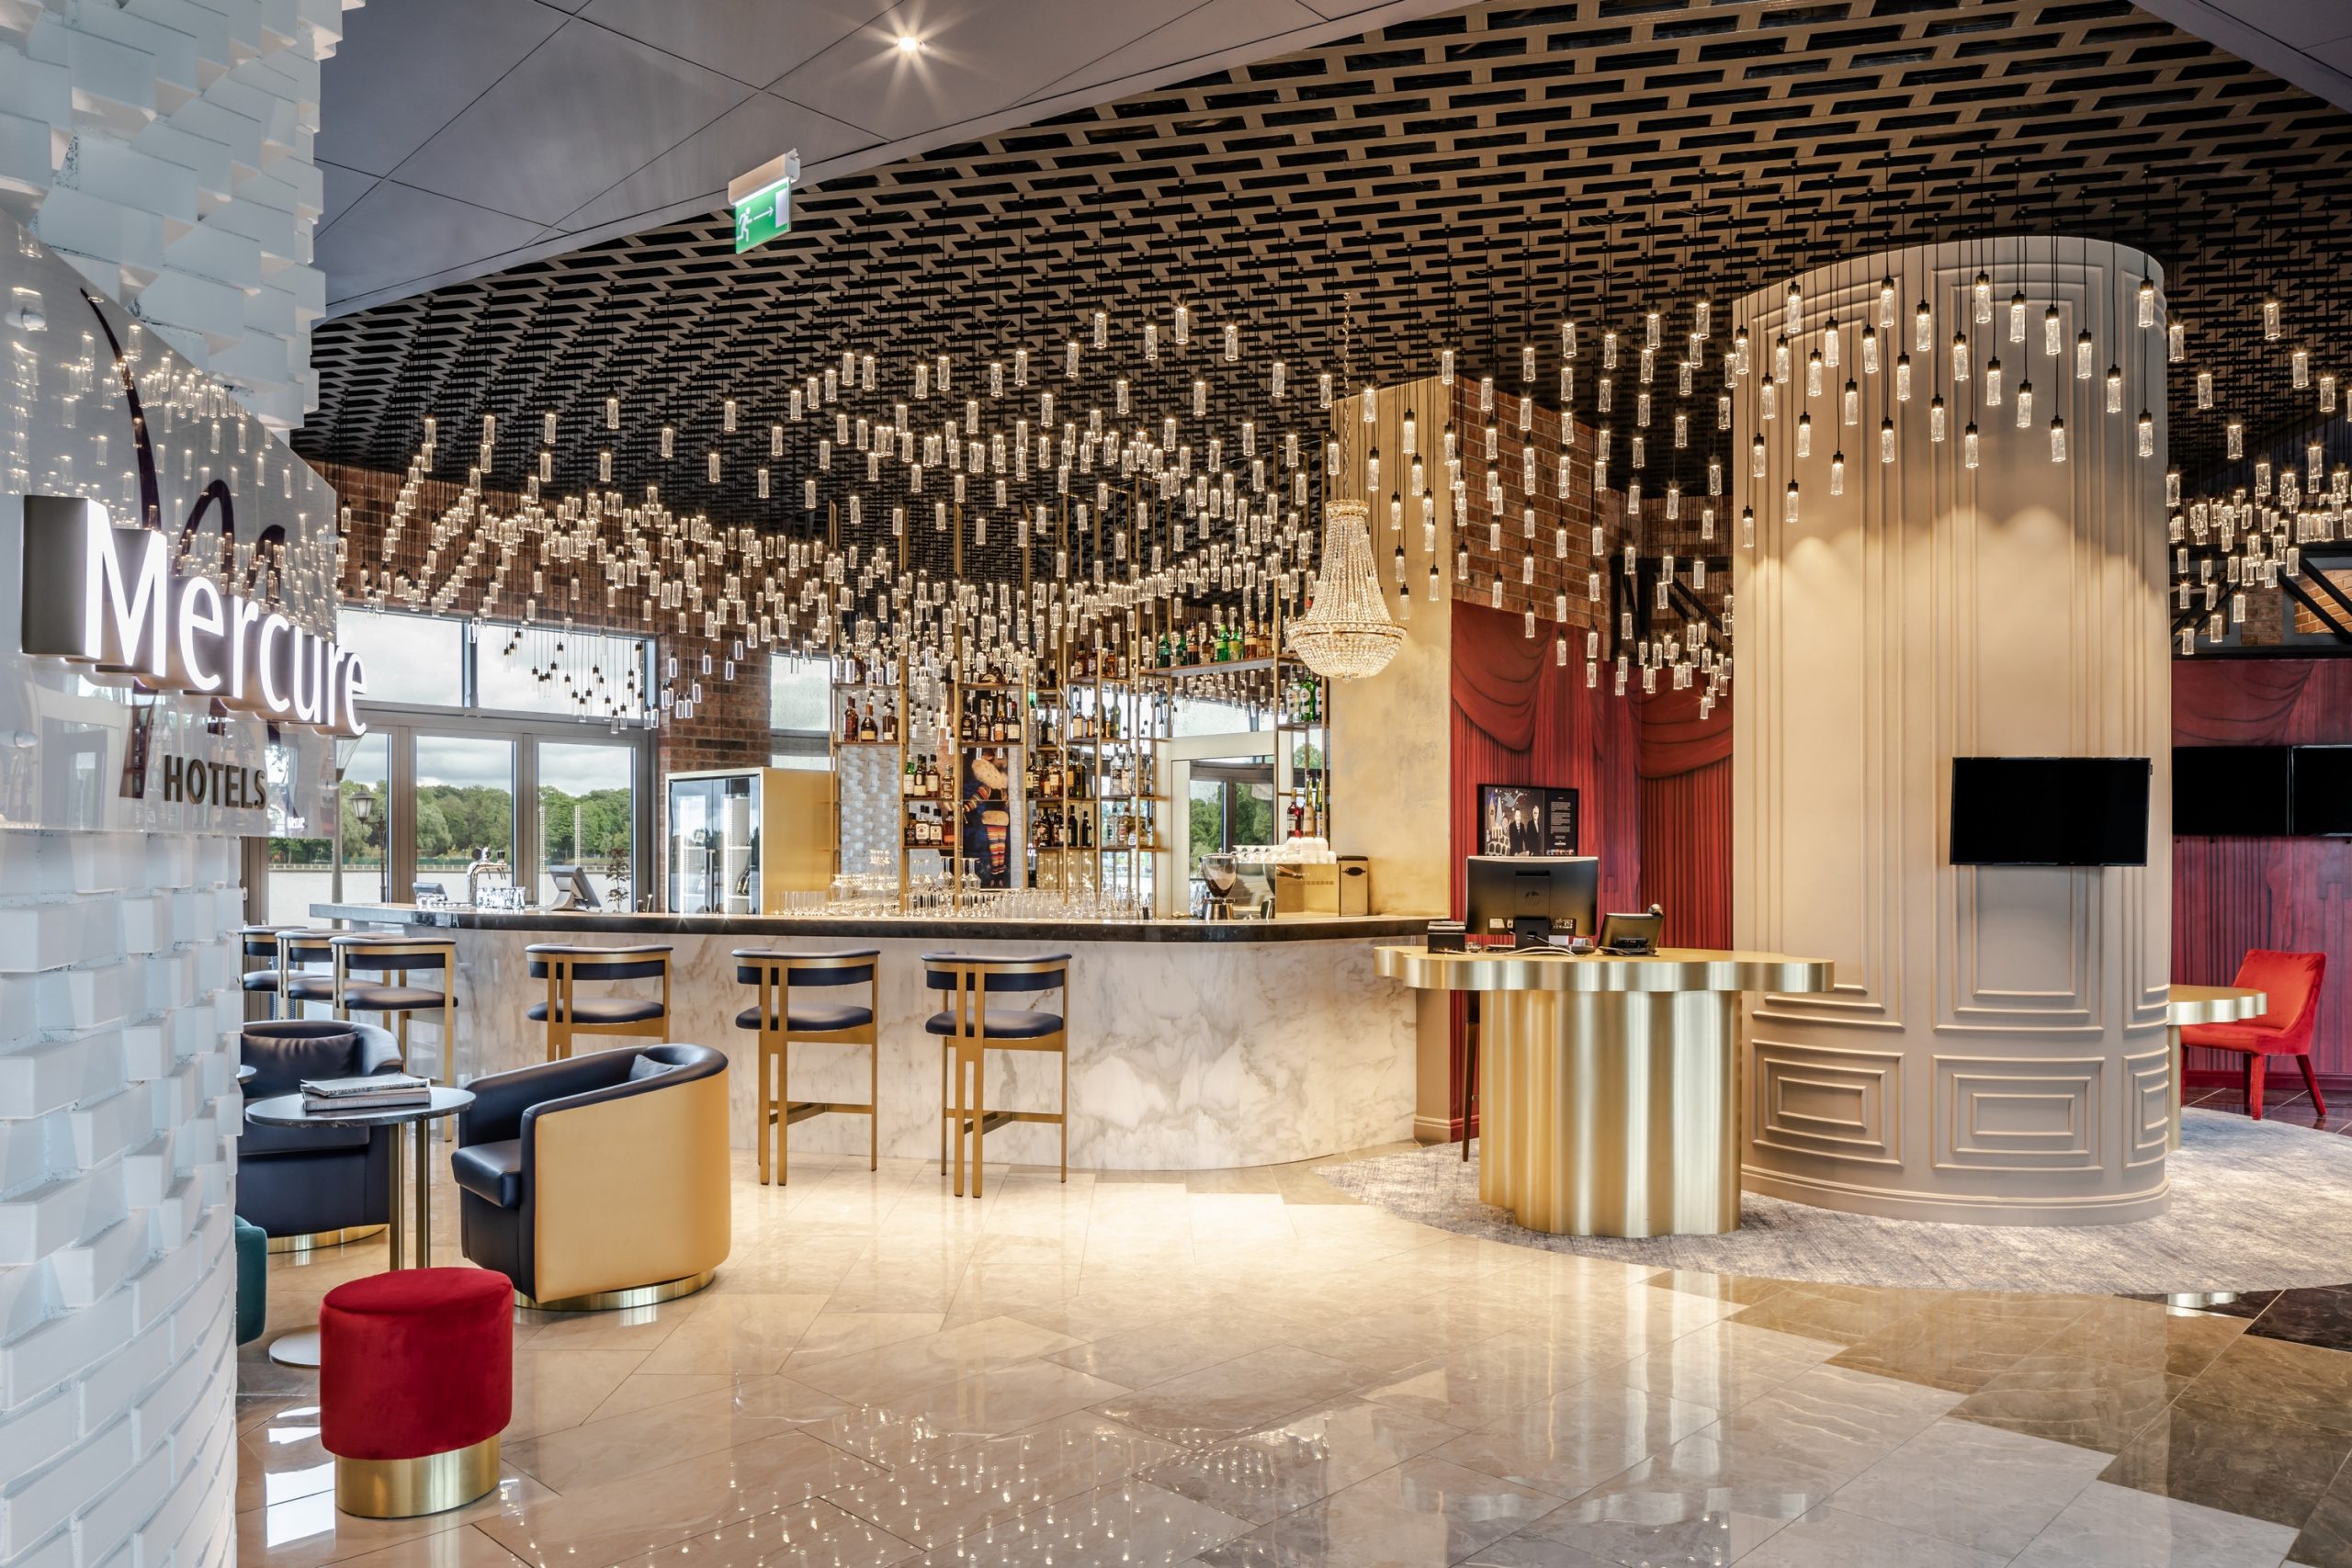 Hotel Mercure Kaliningrad: A tale of magical hospitality design